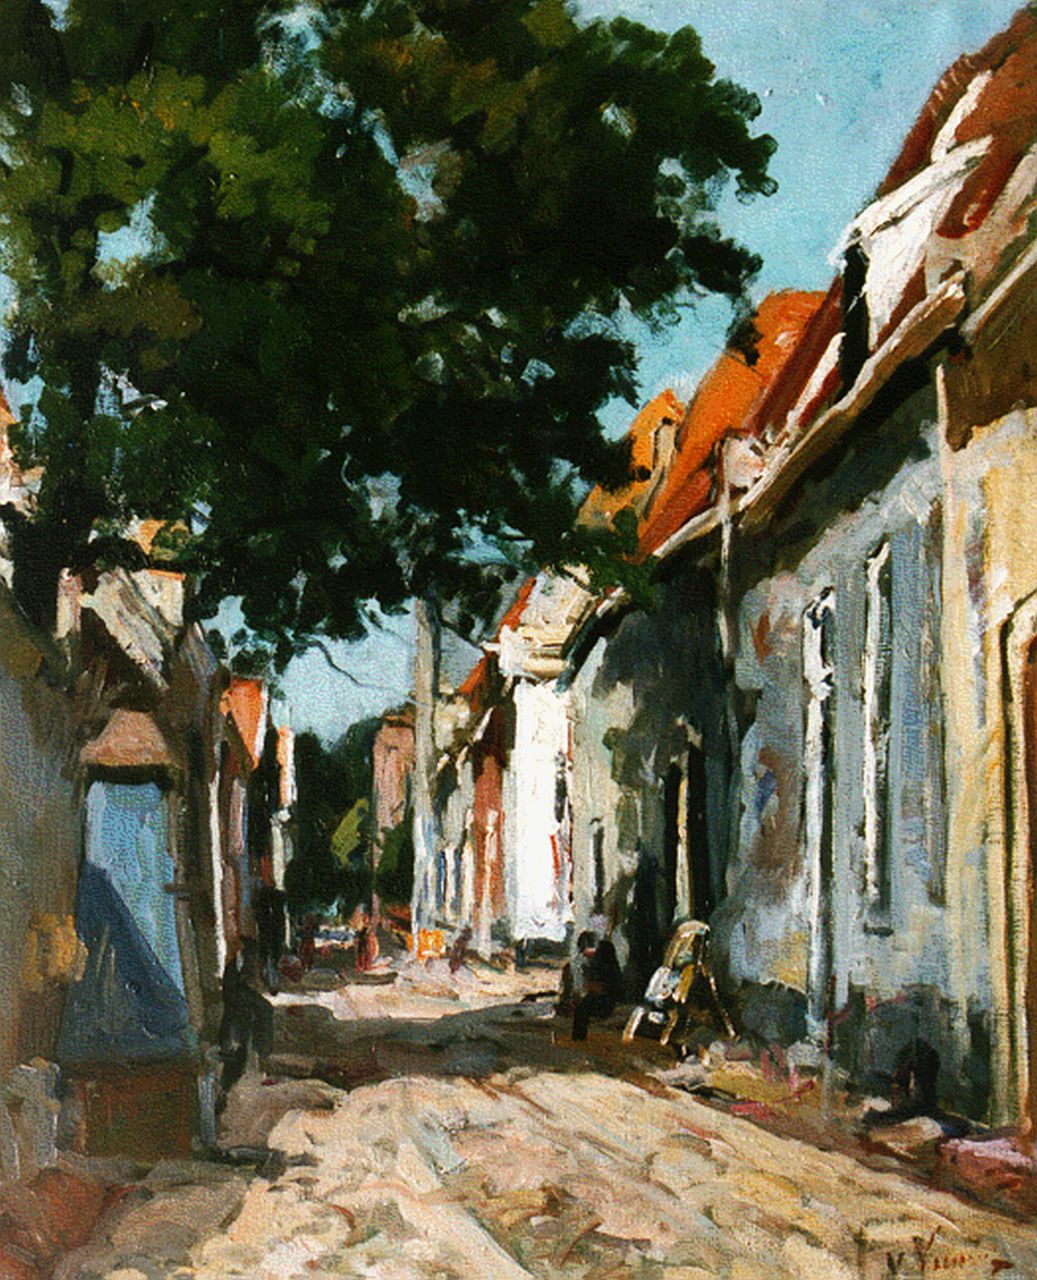 Vuuren J. van | Jan van Vuuren, A sunlit street, Öl auf Leinwand 50,0 x 40,0 cm, signed l.r.